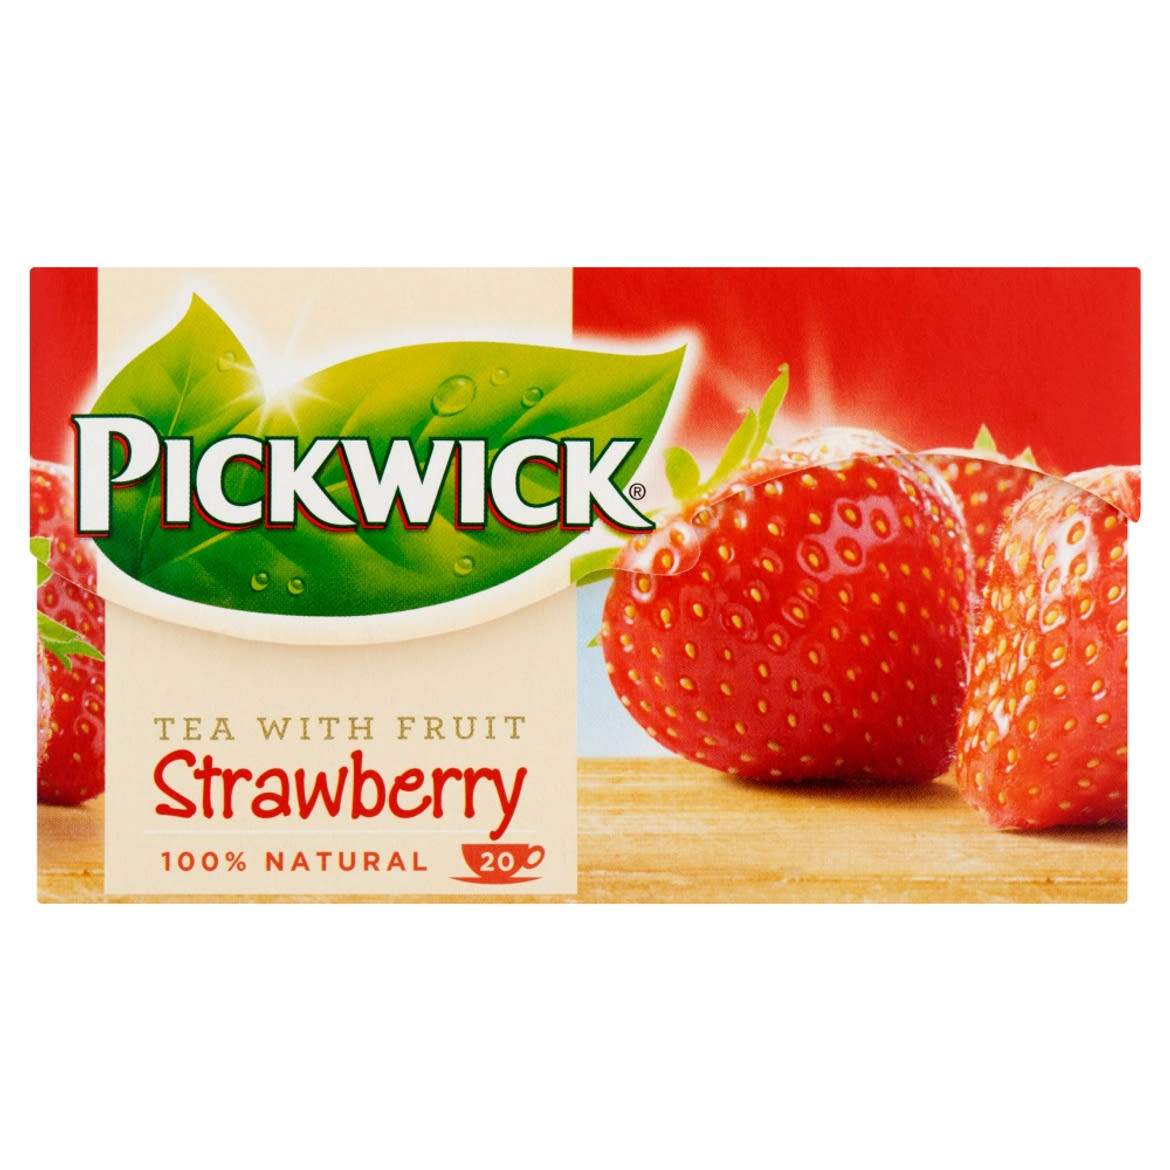 Pickwick eperízű fekete tea